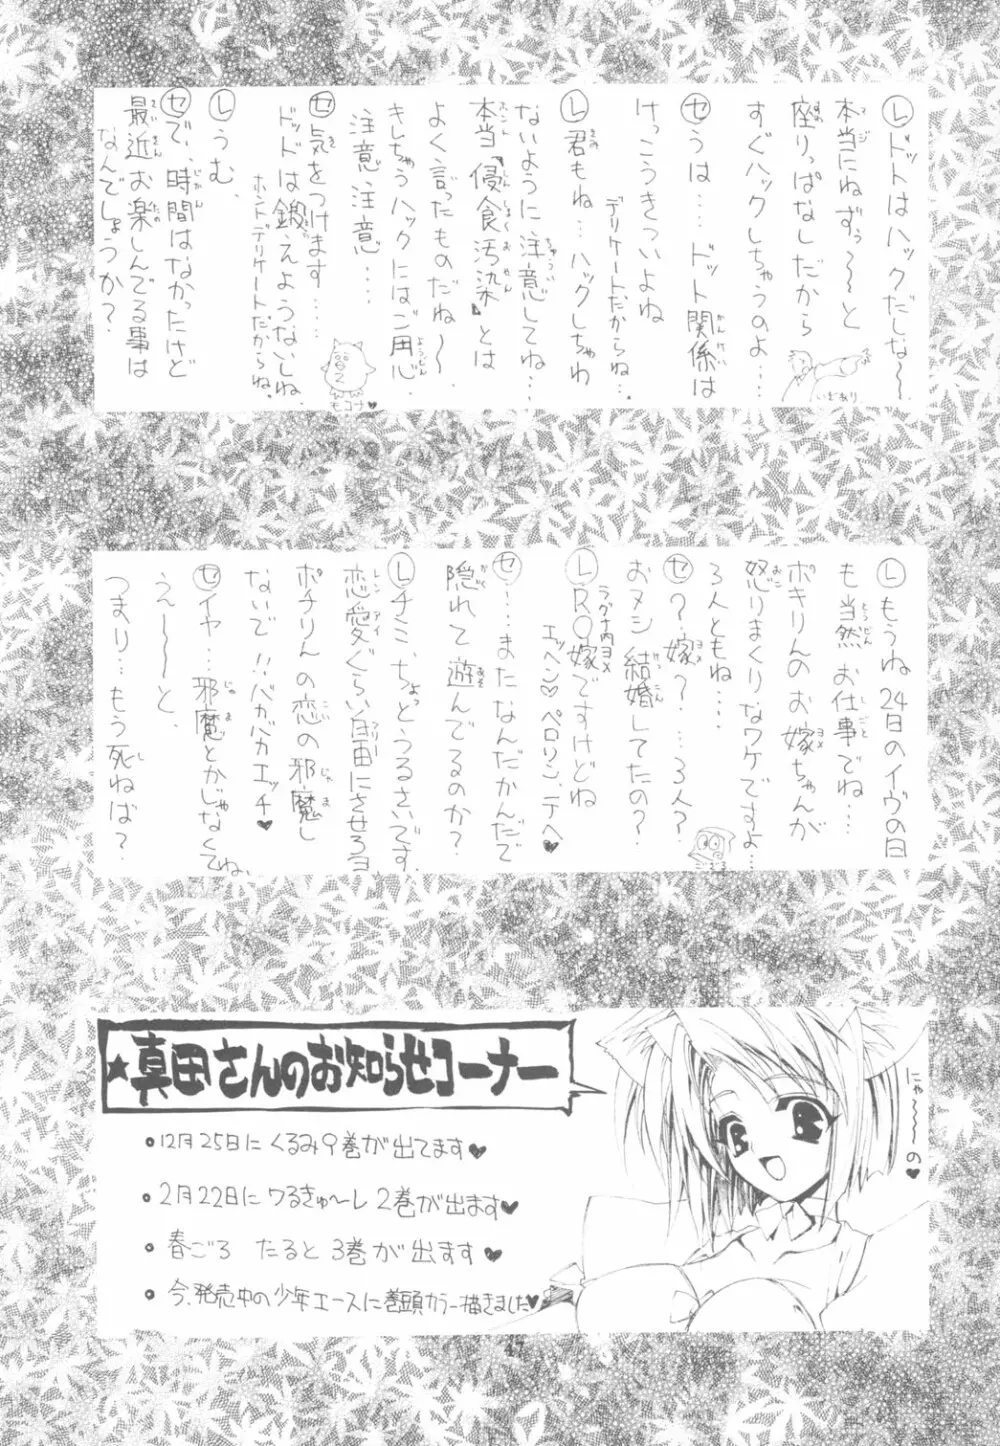 KAISHAKU RAGUNAROK ONLINE - page47